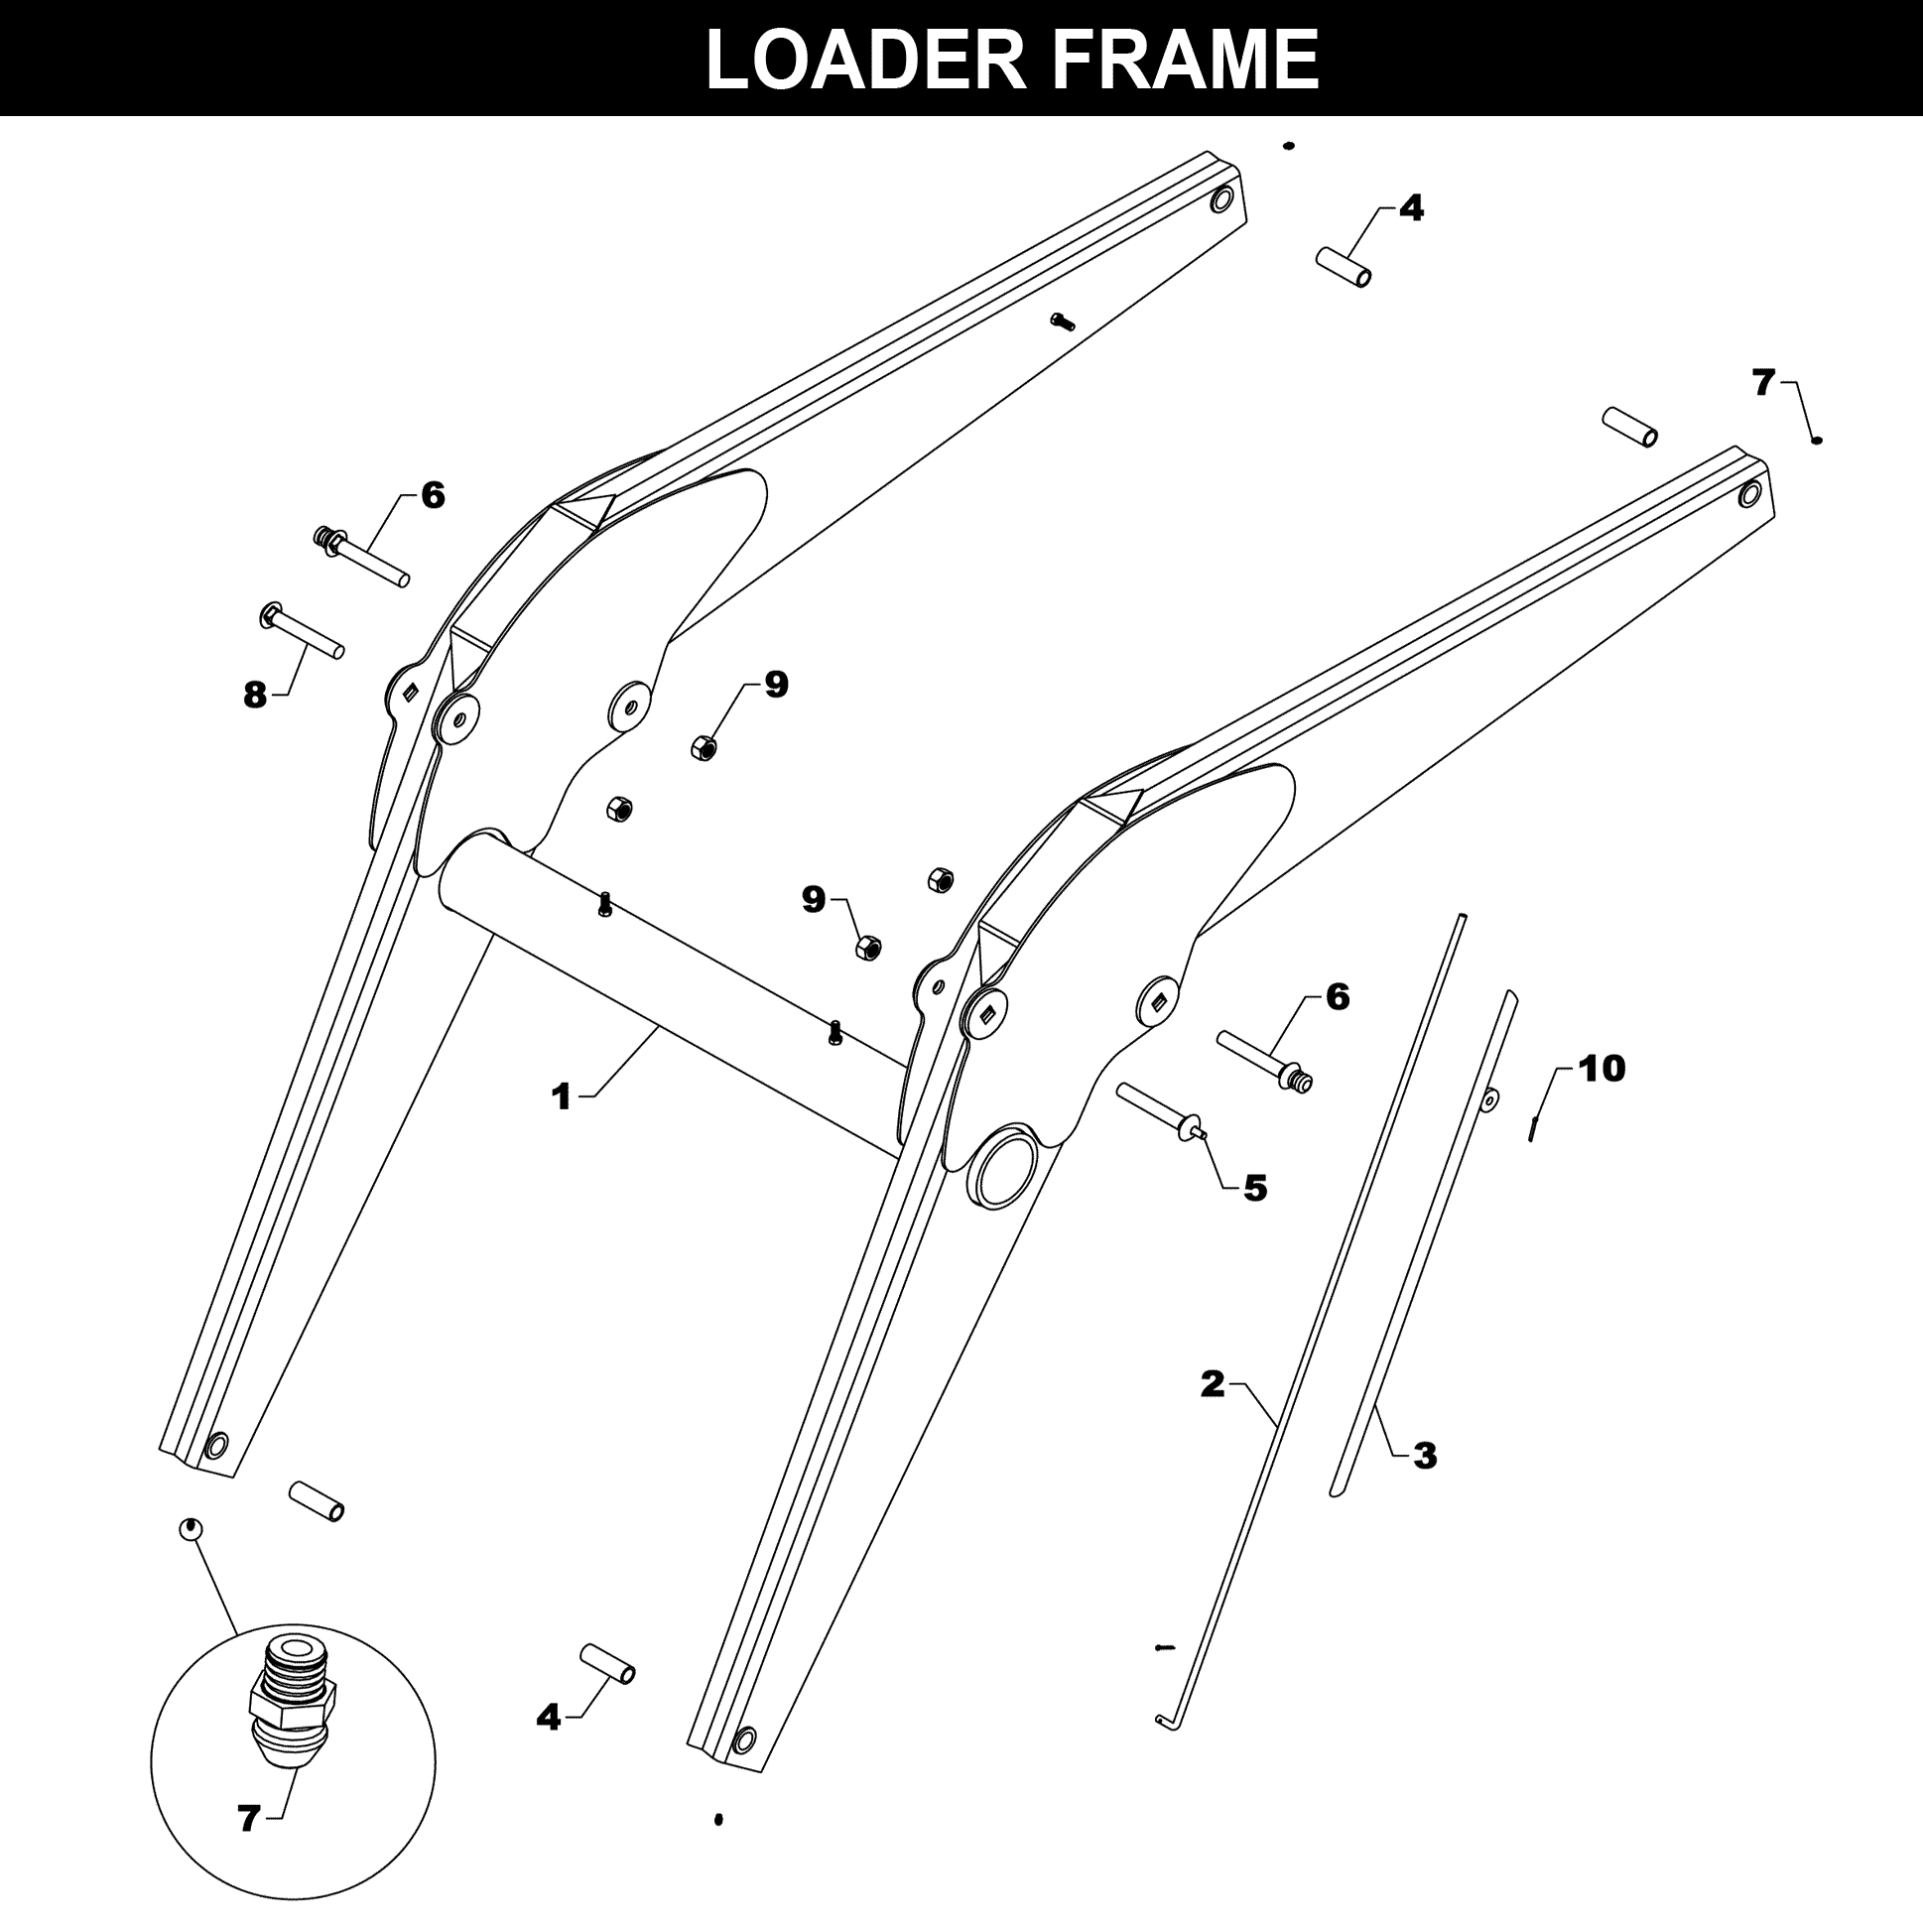 TA-25 Loader Frame